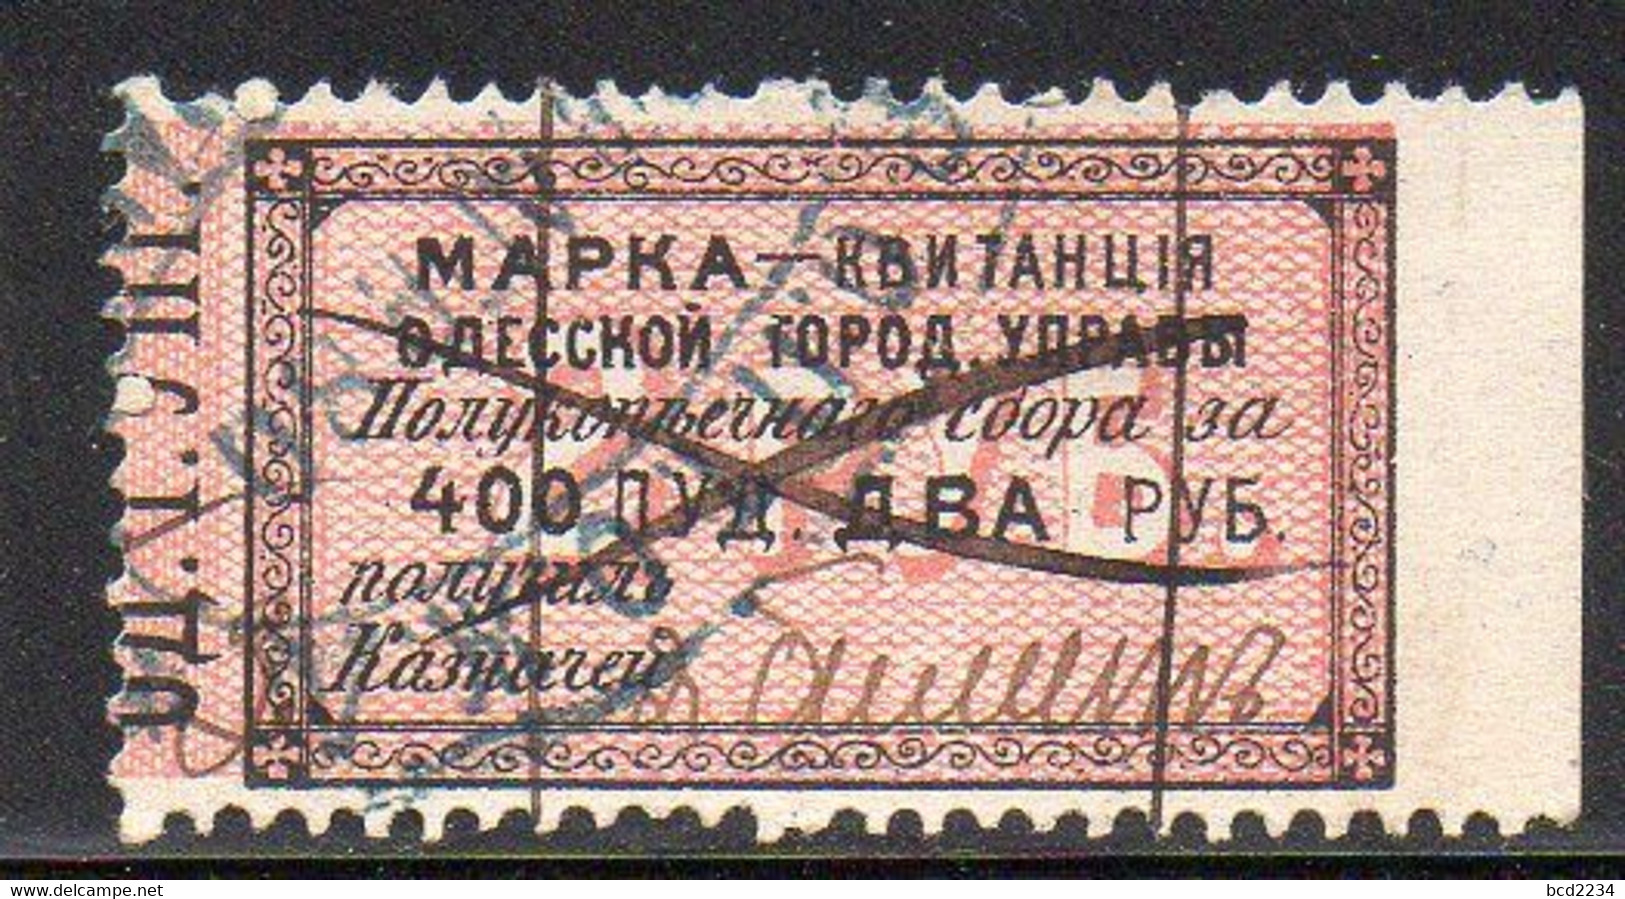 RUSSIA UKRAINE ODESSA MUNICIPAL REVENUE 1879 2R (400) BLACK & PINK BAREFOOT #23 BORDER WITH SCROLLS MARGIN RIGHT FISCAUX - Fiscales